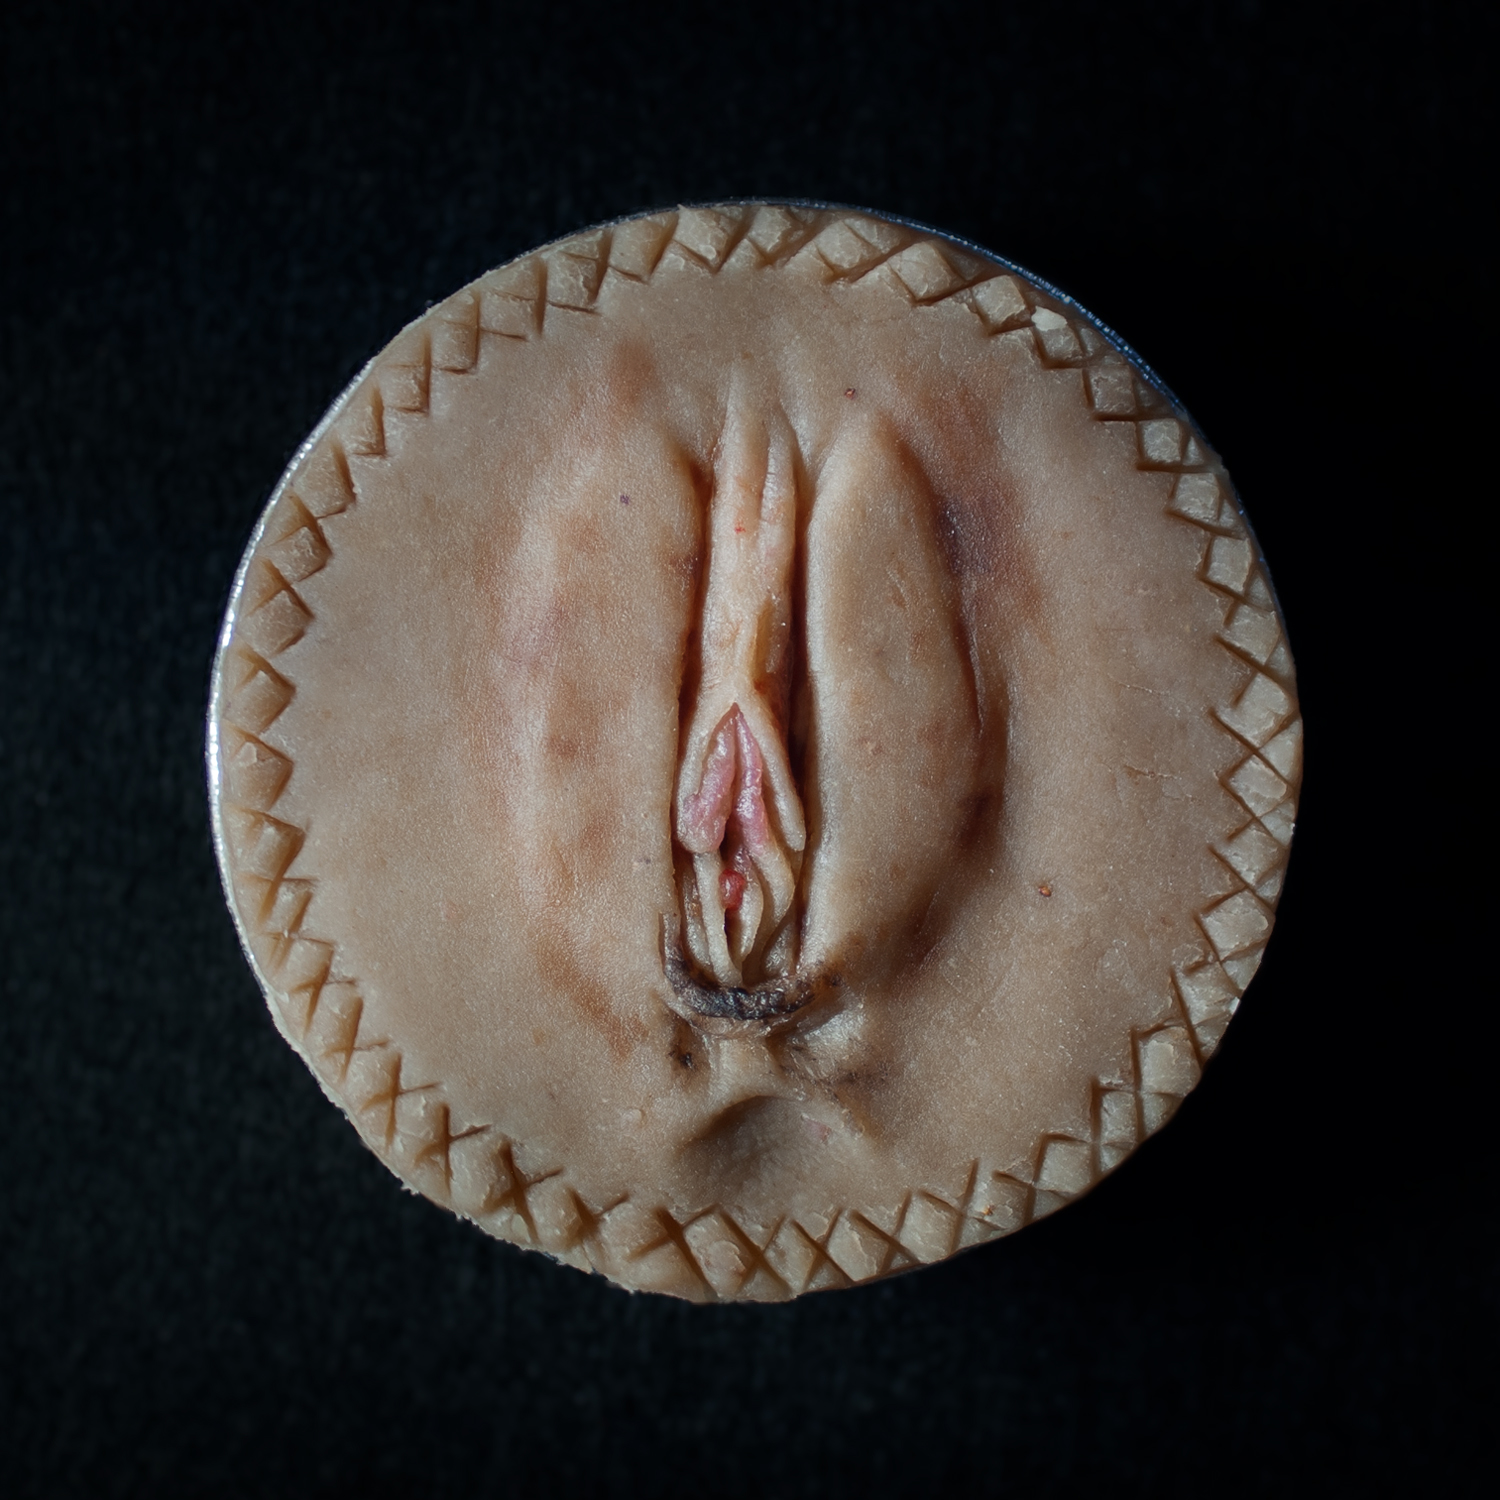 Pie made to look like a vulva